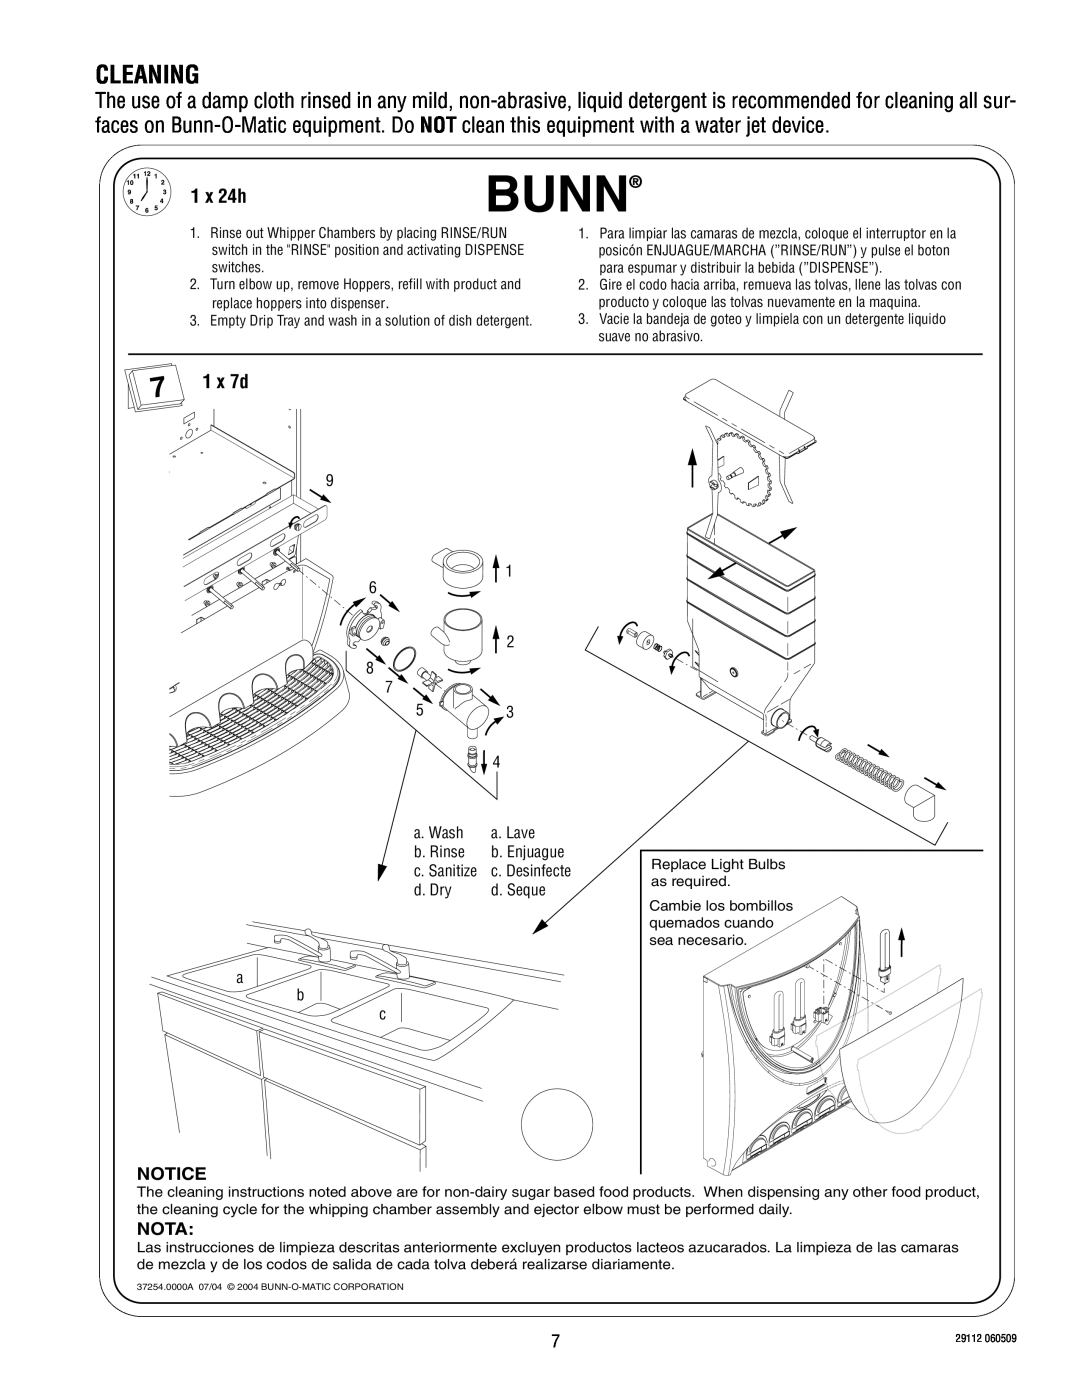 Bunn FMD-2 service manual Cleaning, 1 x 24h, 1 x 7d, Nota 